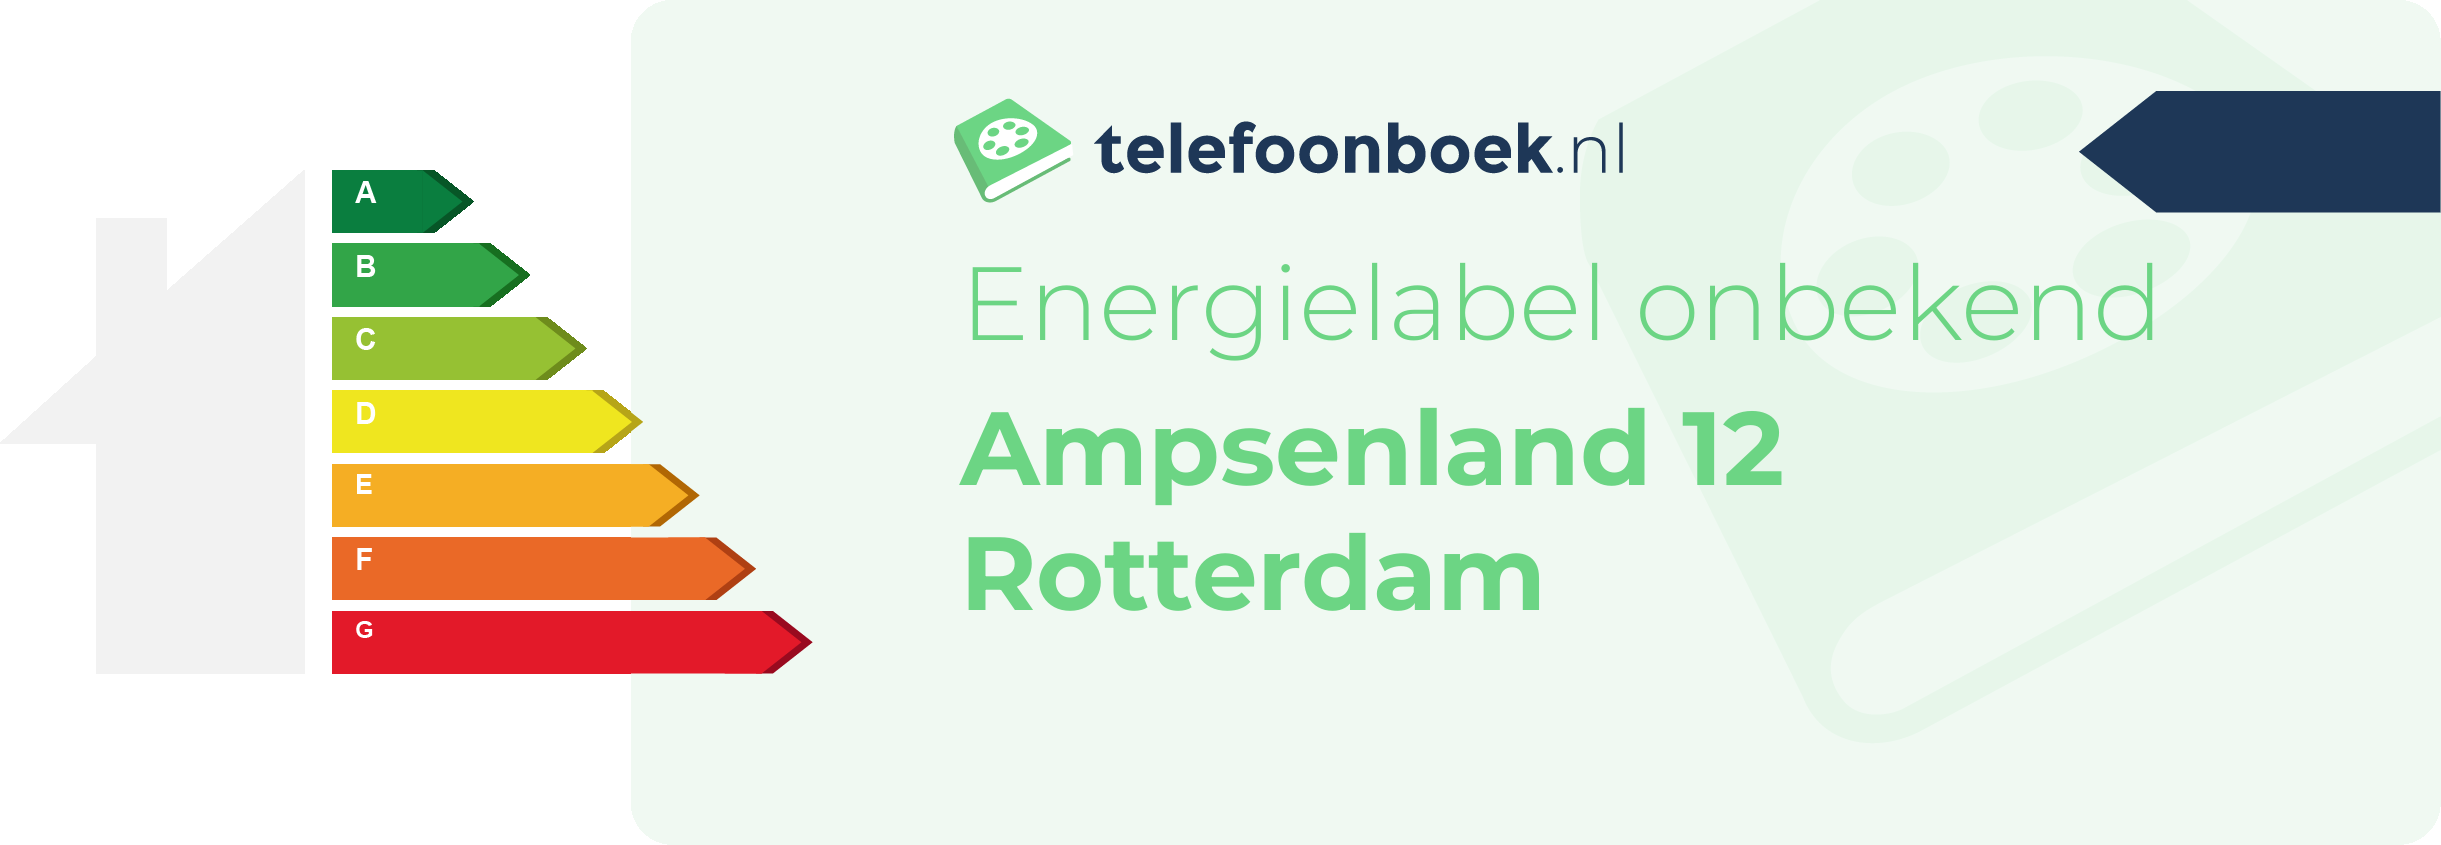 Energielabel Ampsenland 12 Rotterdam